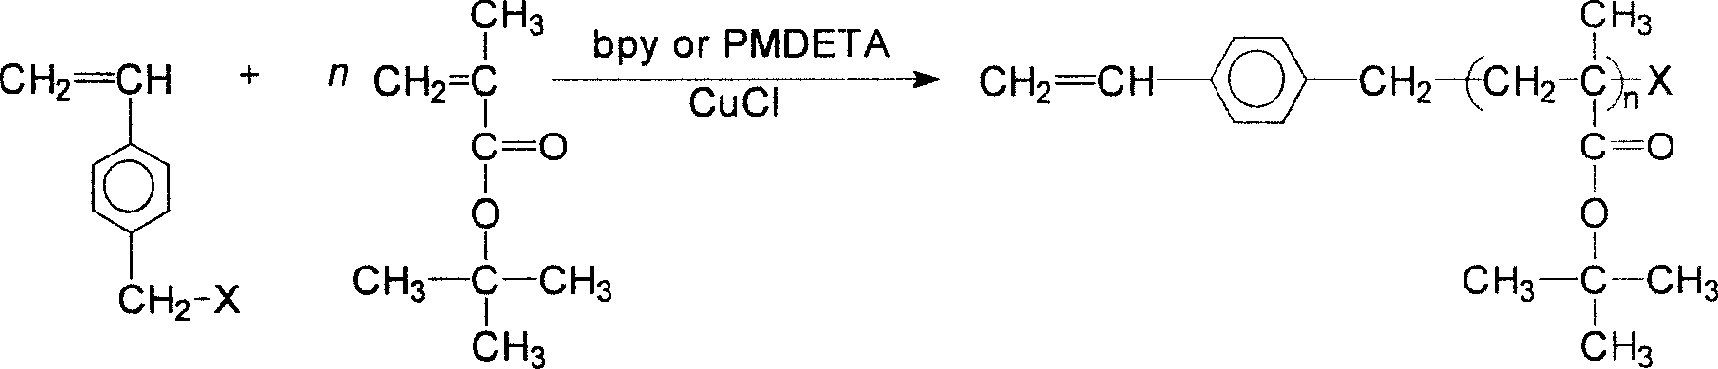 Preparation of polymethyl tert-butyl acrylate large molecular monomer by atom transfer radial